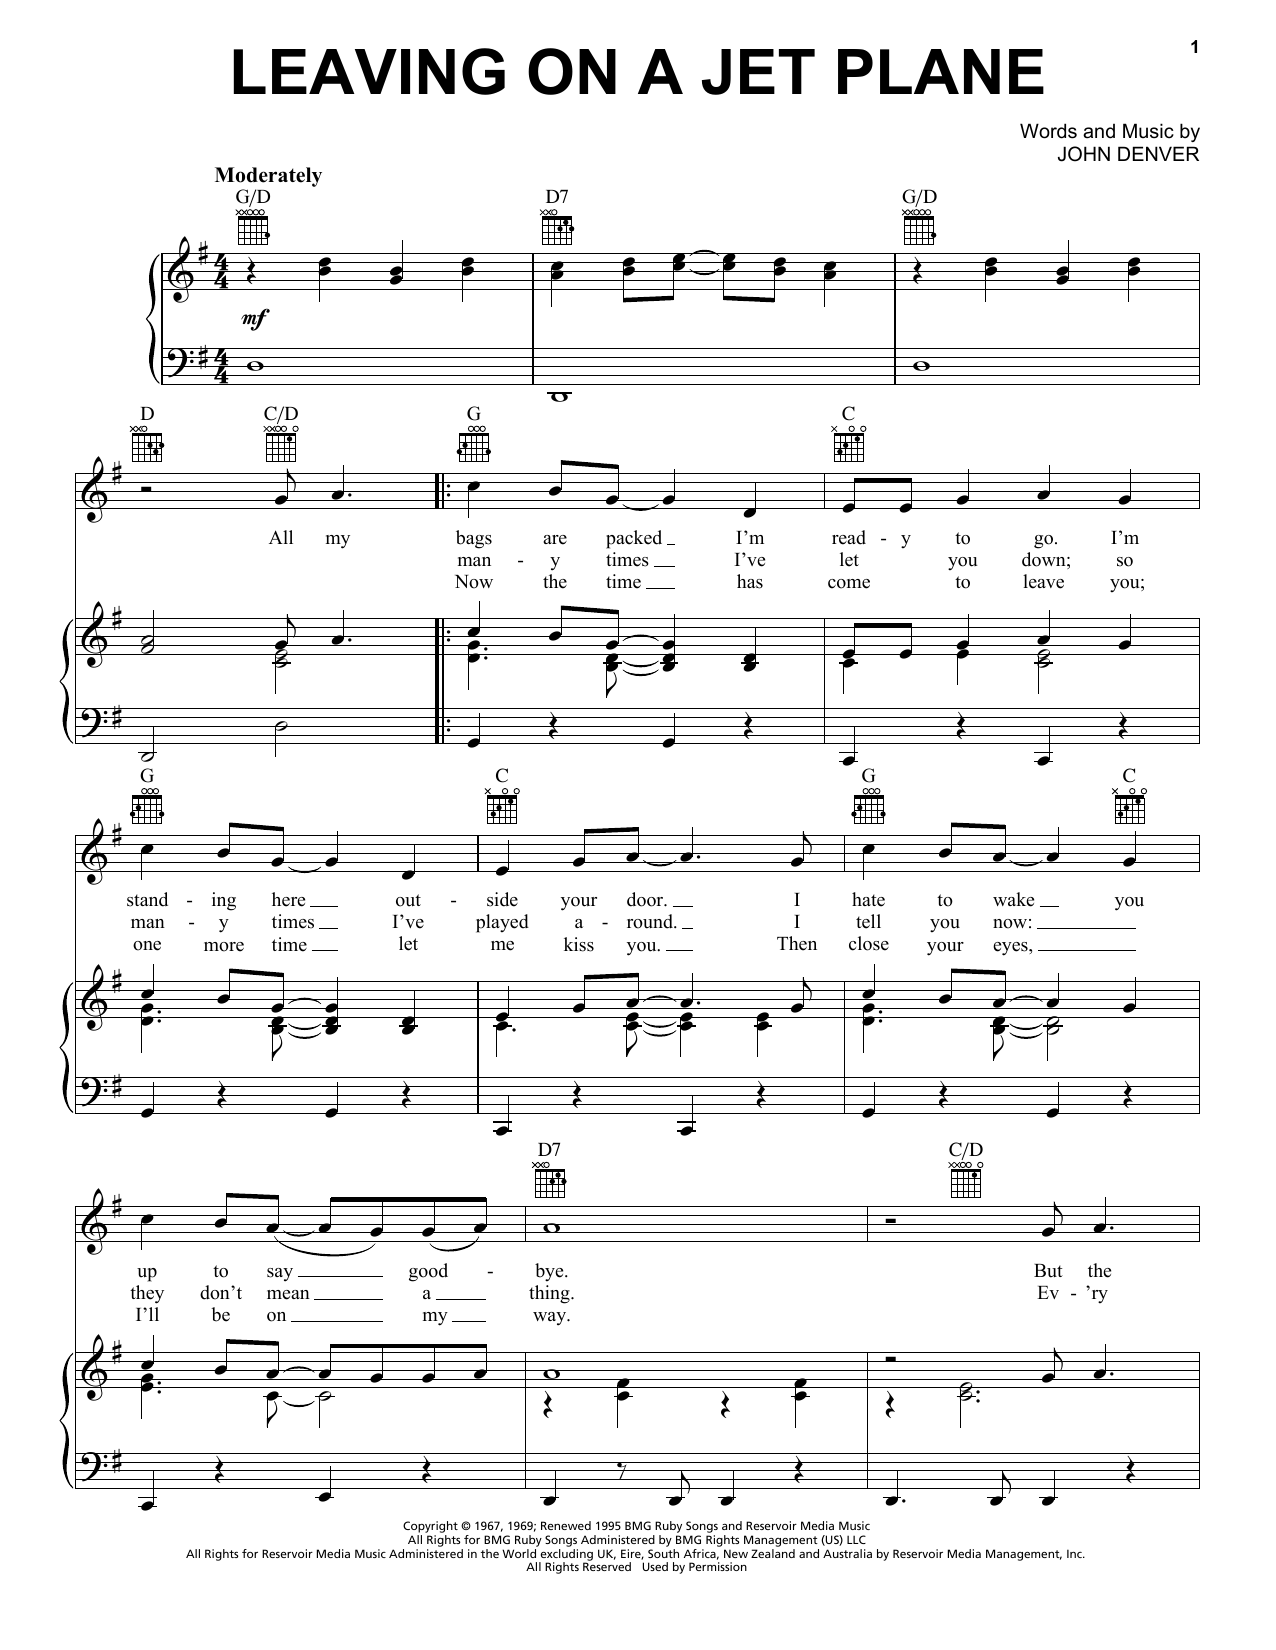 John Denver Leaving On A Jet Plane Sheet Music Notes & Chords for Lyrics & Chords - Download or Print PDF